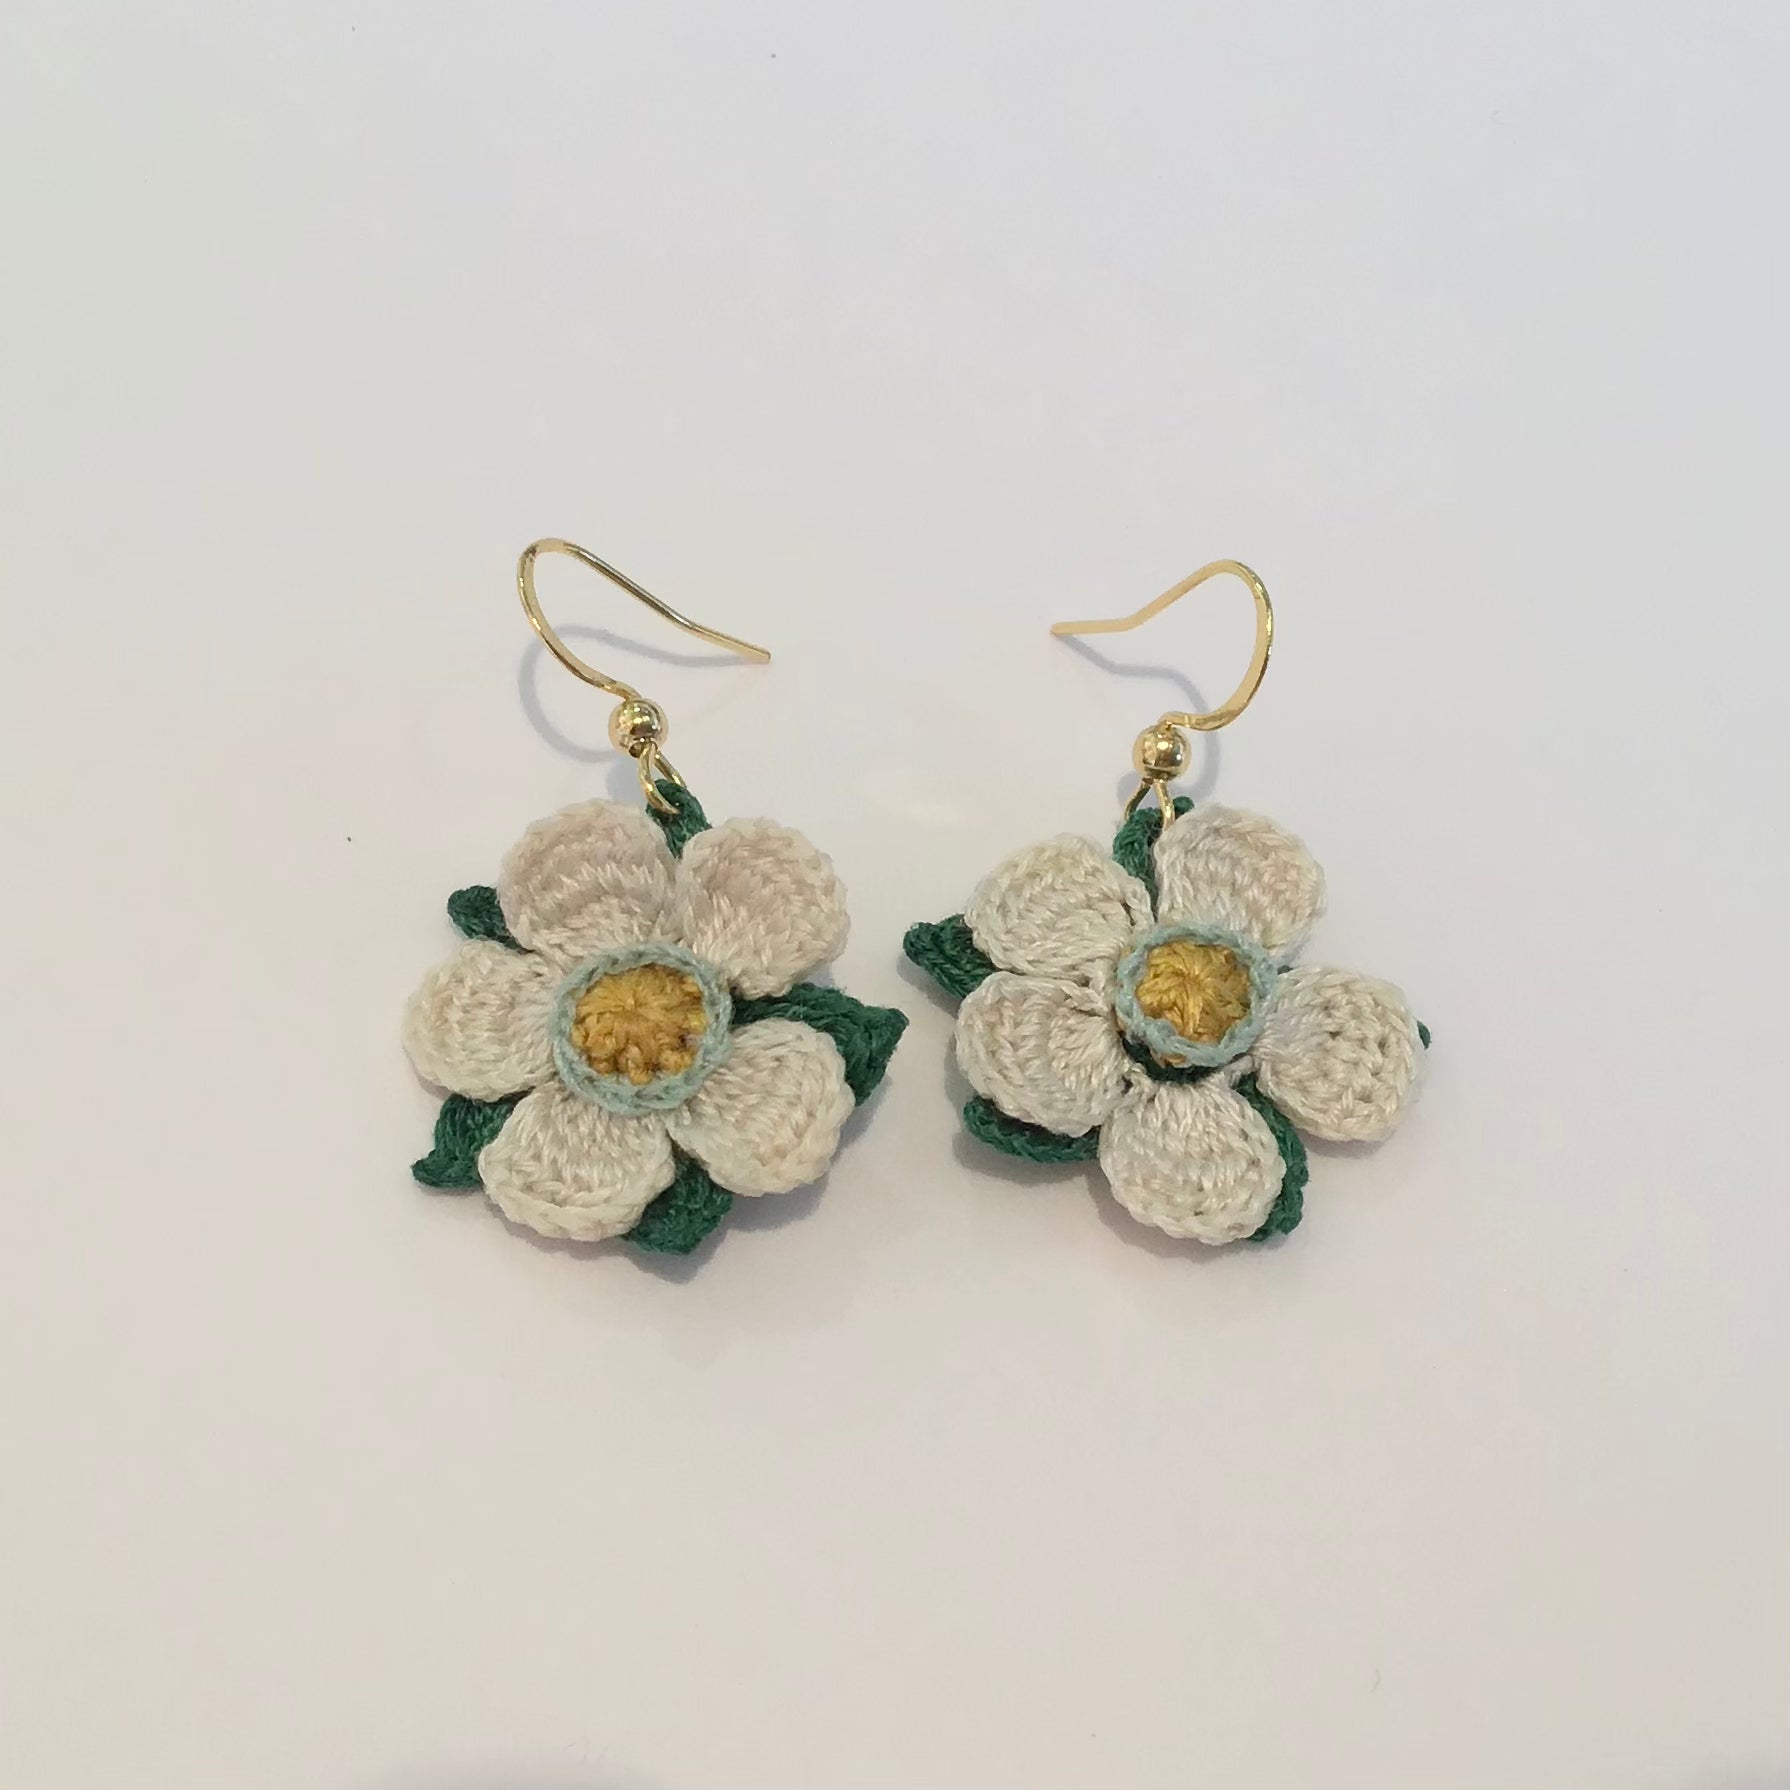 Hand crocheted Berry Flower earrings